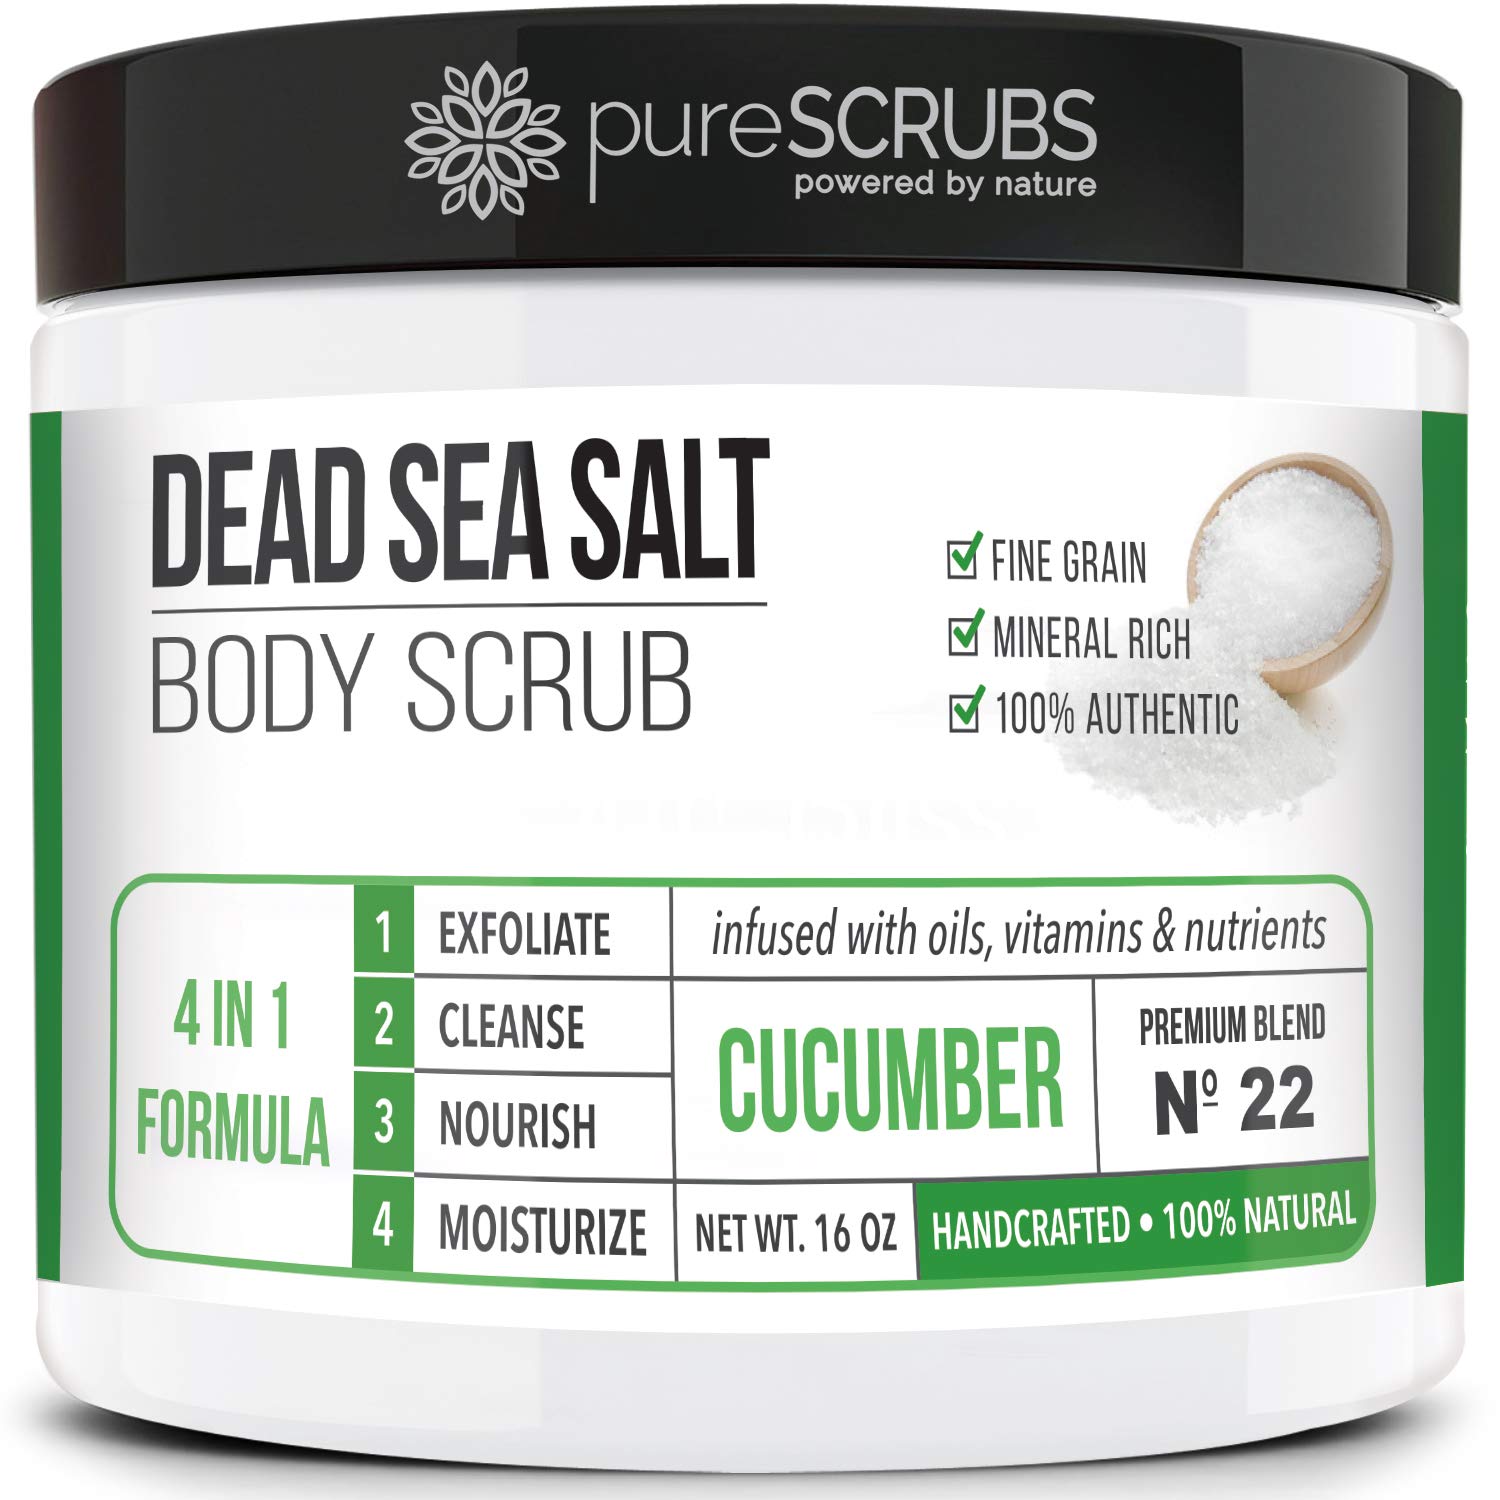 pureSCRUBS Premium Organic Body Scrub Set - Large 16oz CUCUMBER - Dead Sea Salt Body Scrubs for Women Exfoliation KP Bump Eraser Body Scrub INCLUDES Wooden Spoon, Loofah & Soap